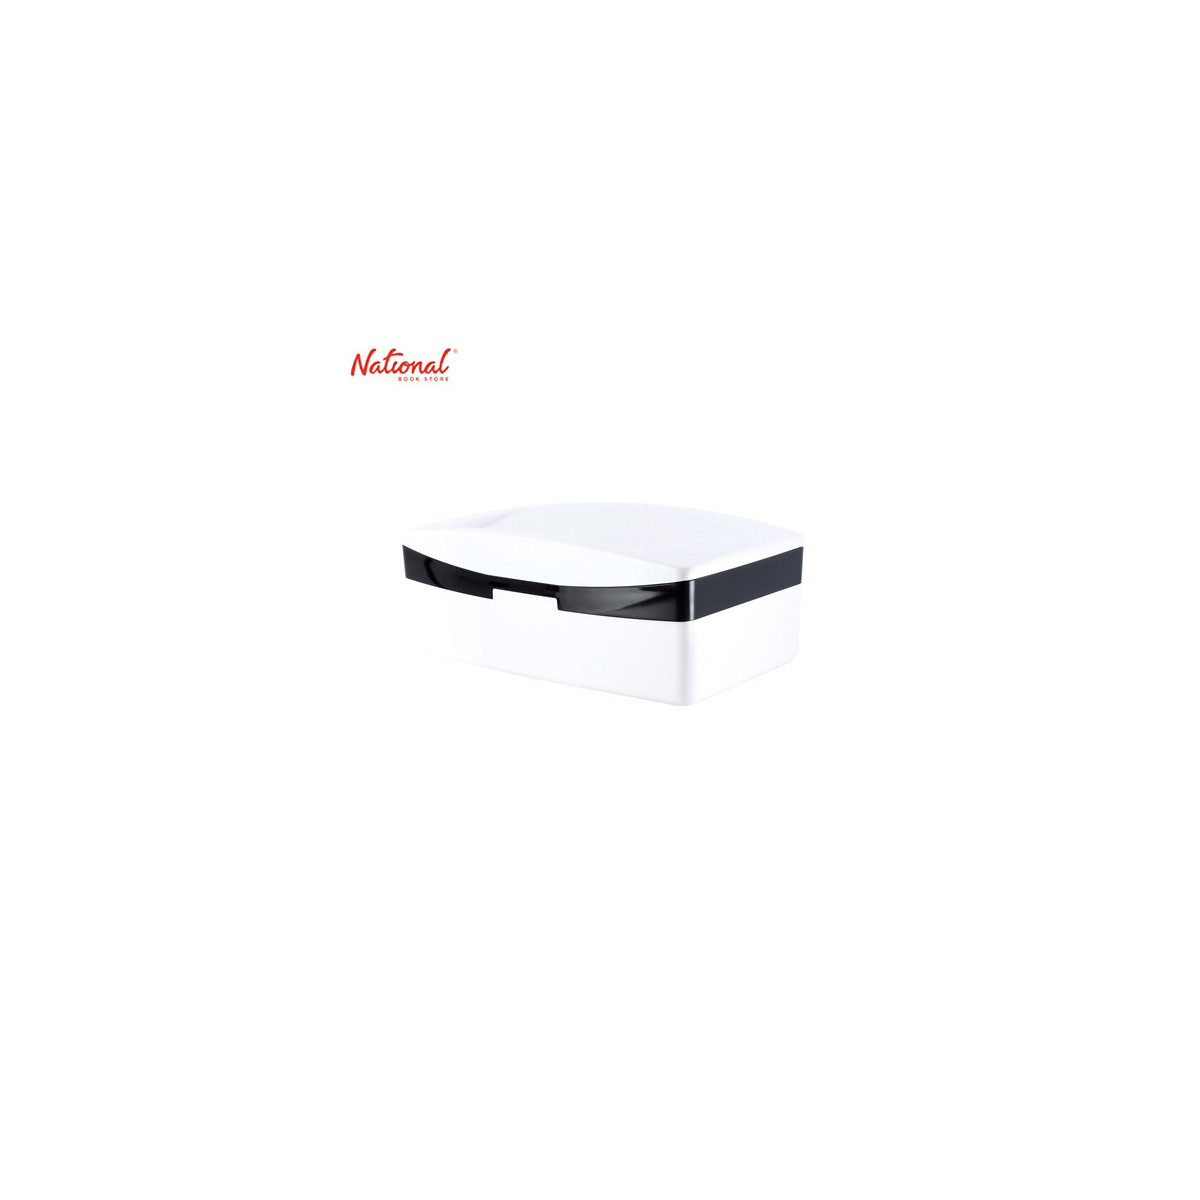 Olife Desk Organizer S-113-101 Black And White Smart Box